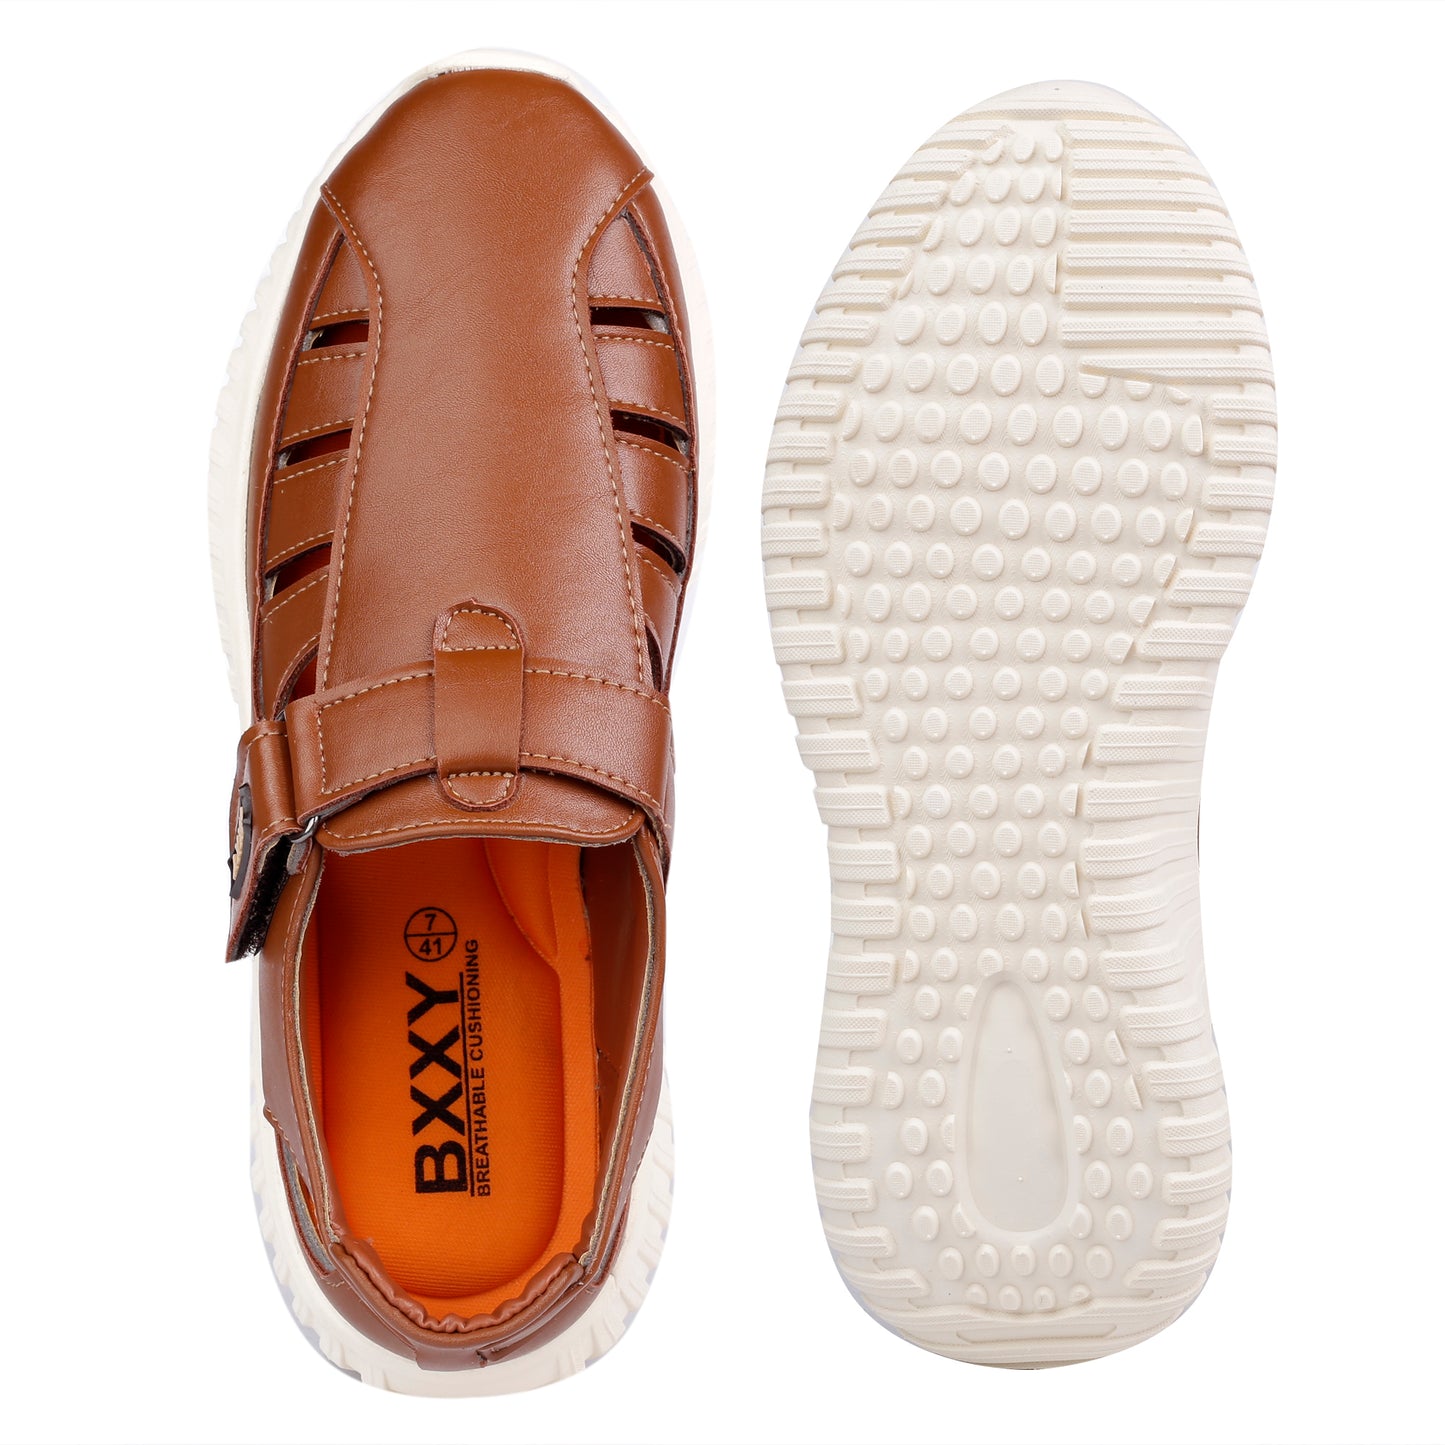 Men's Latest PU Upper Casual Roman Sandals